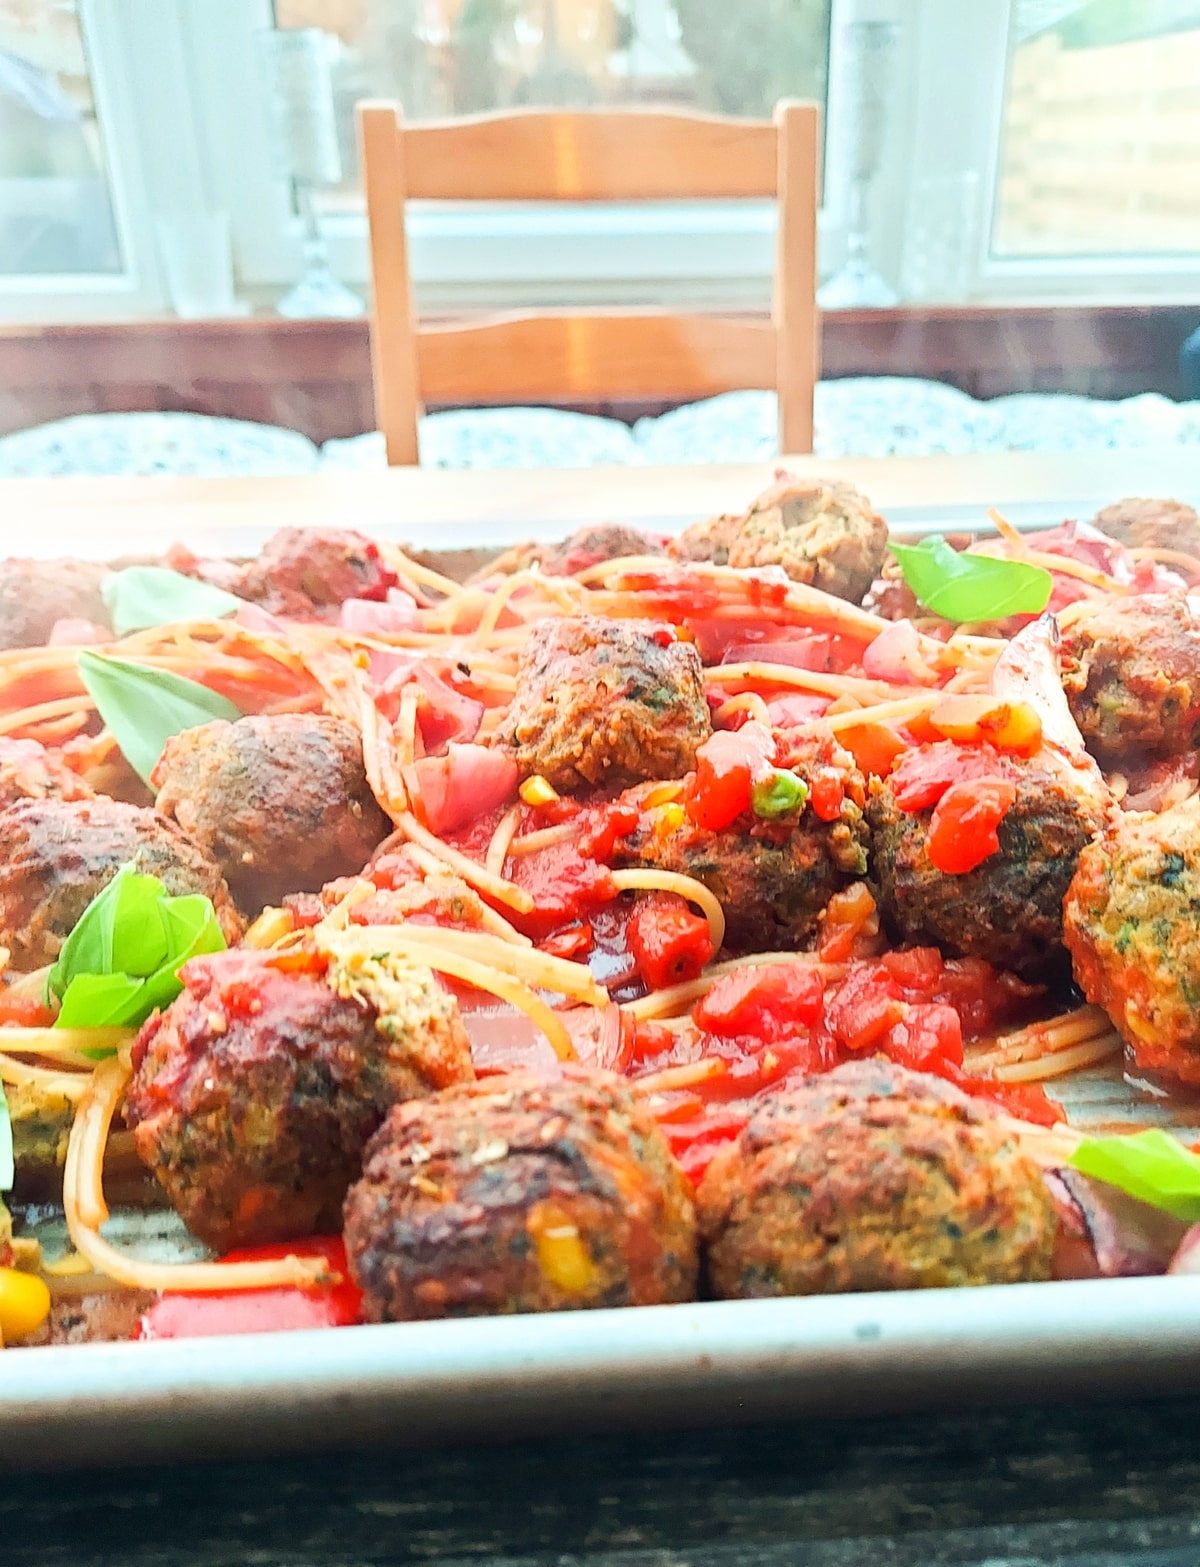 Vegan meatballs and spaghetti bake in a sheet pan